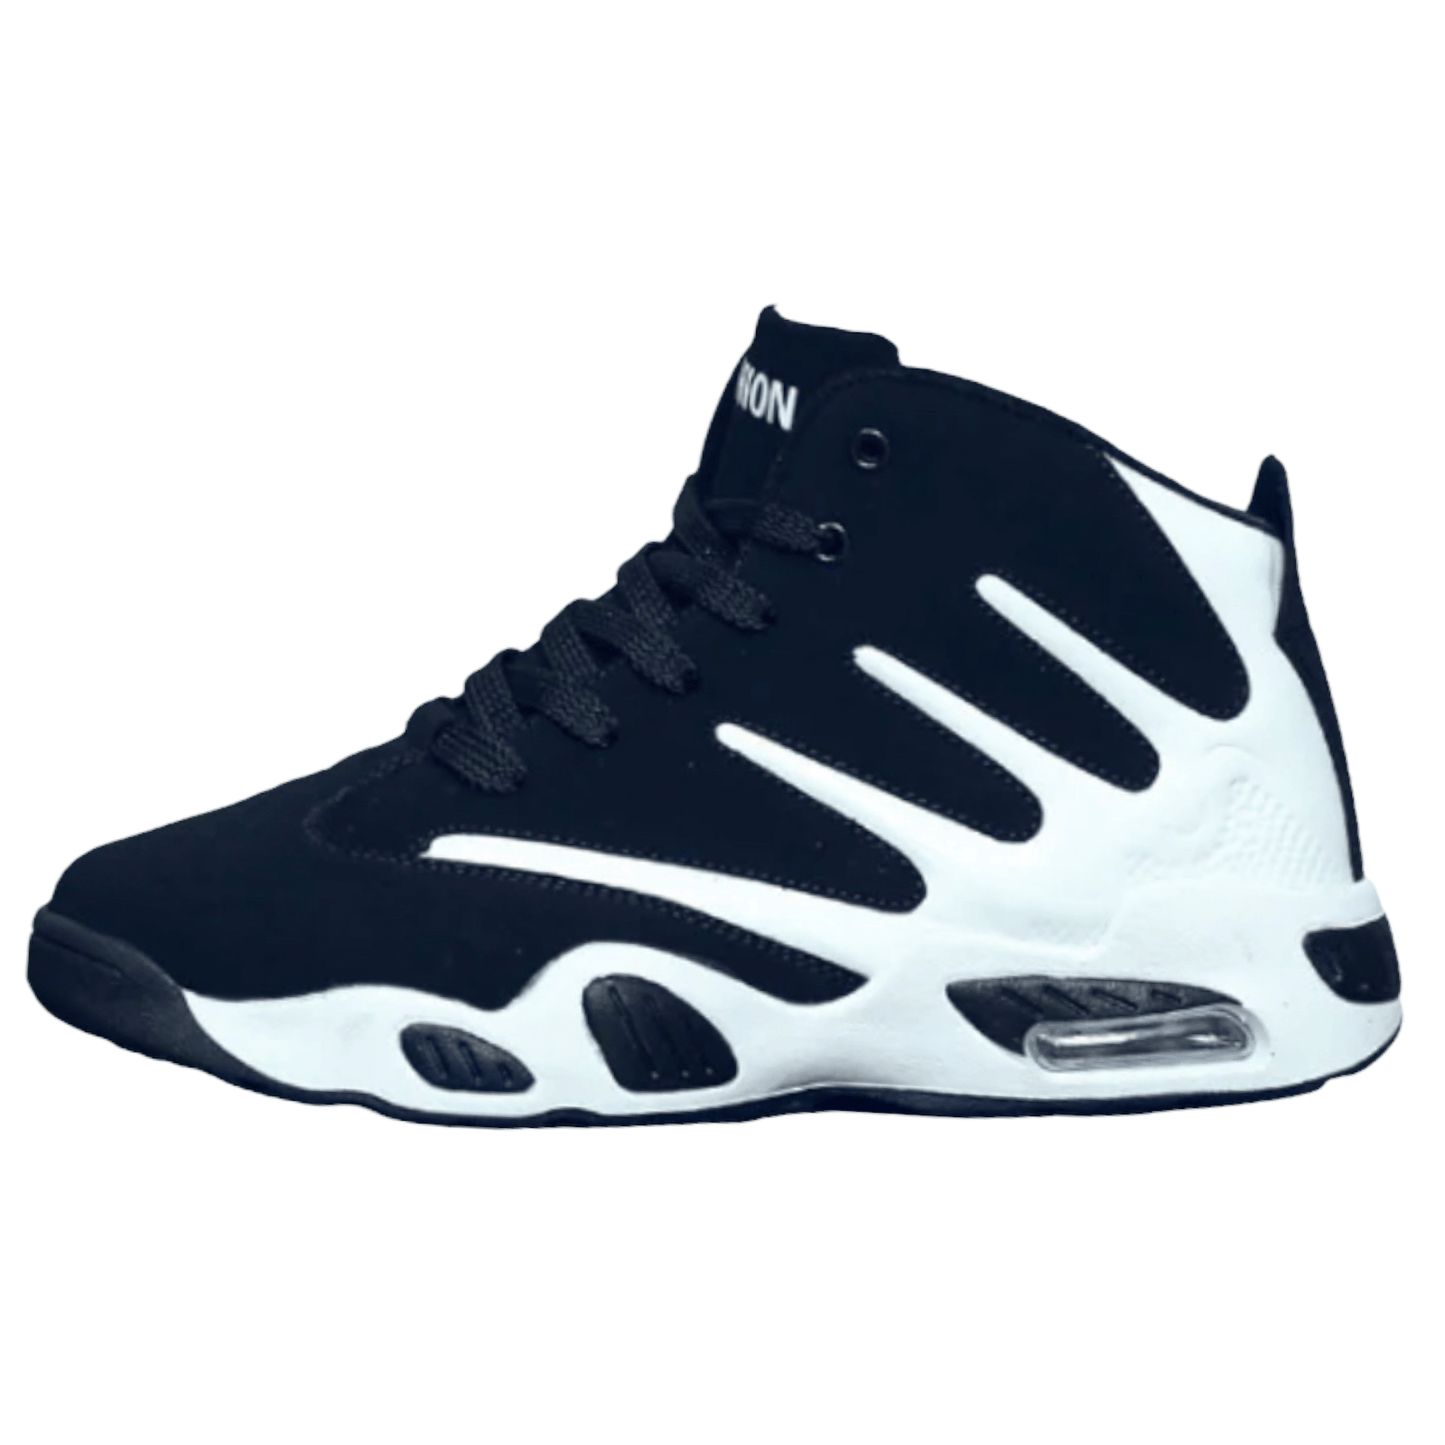 black white sneakers claw flashlander left side basketball sneakers